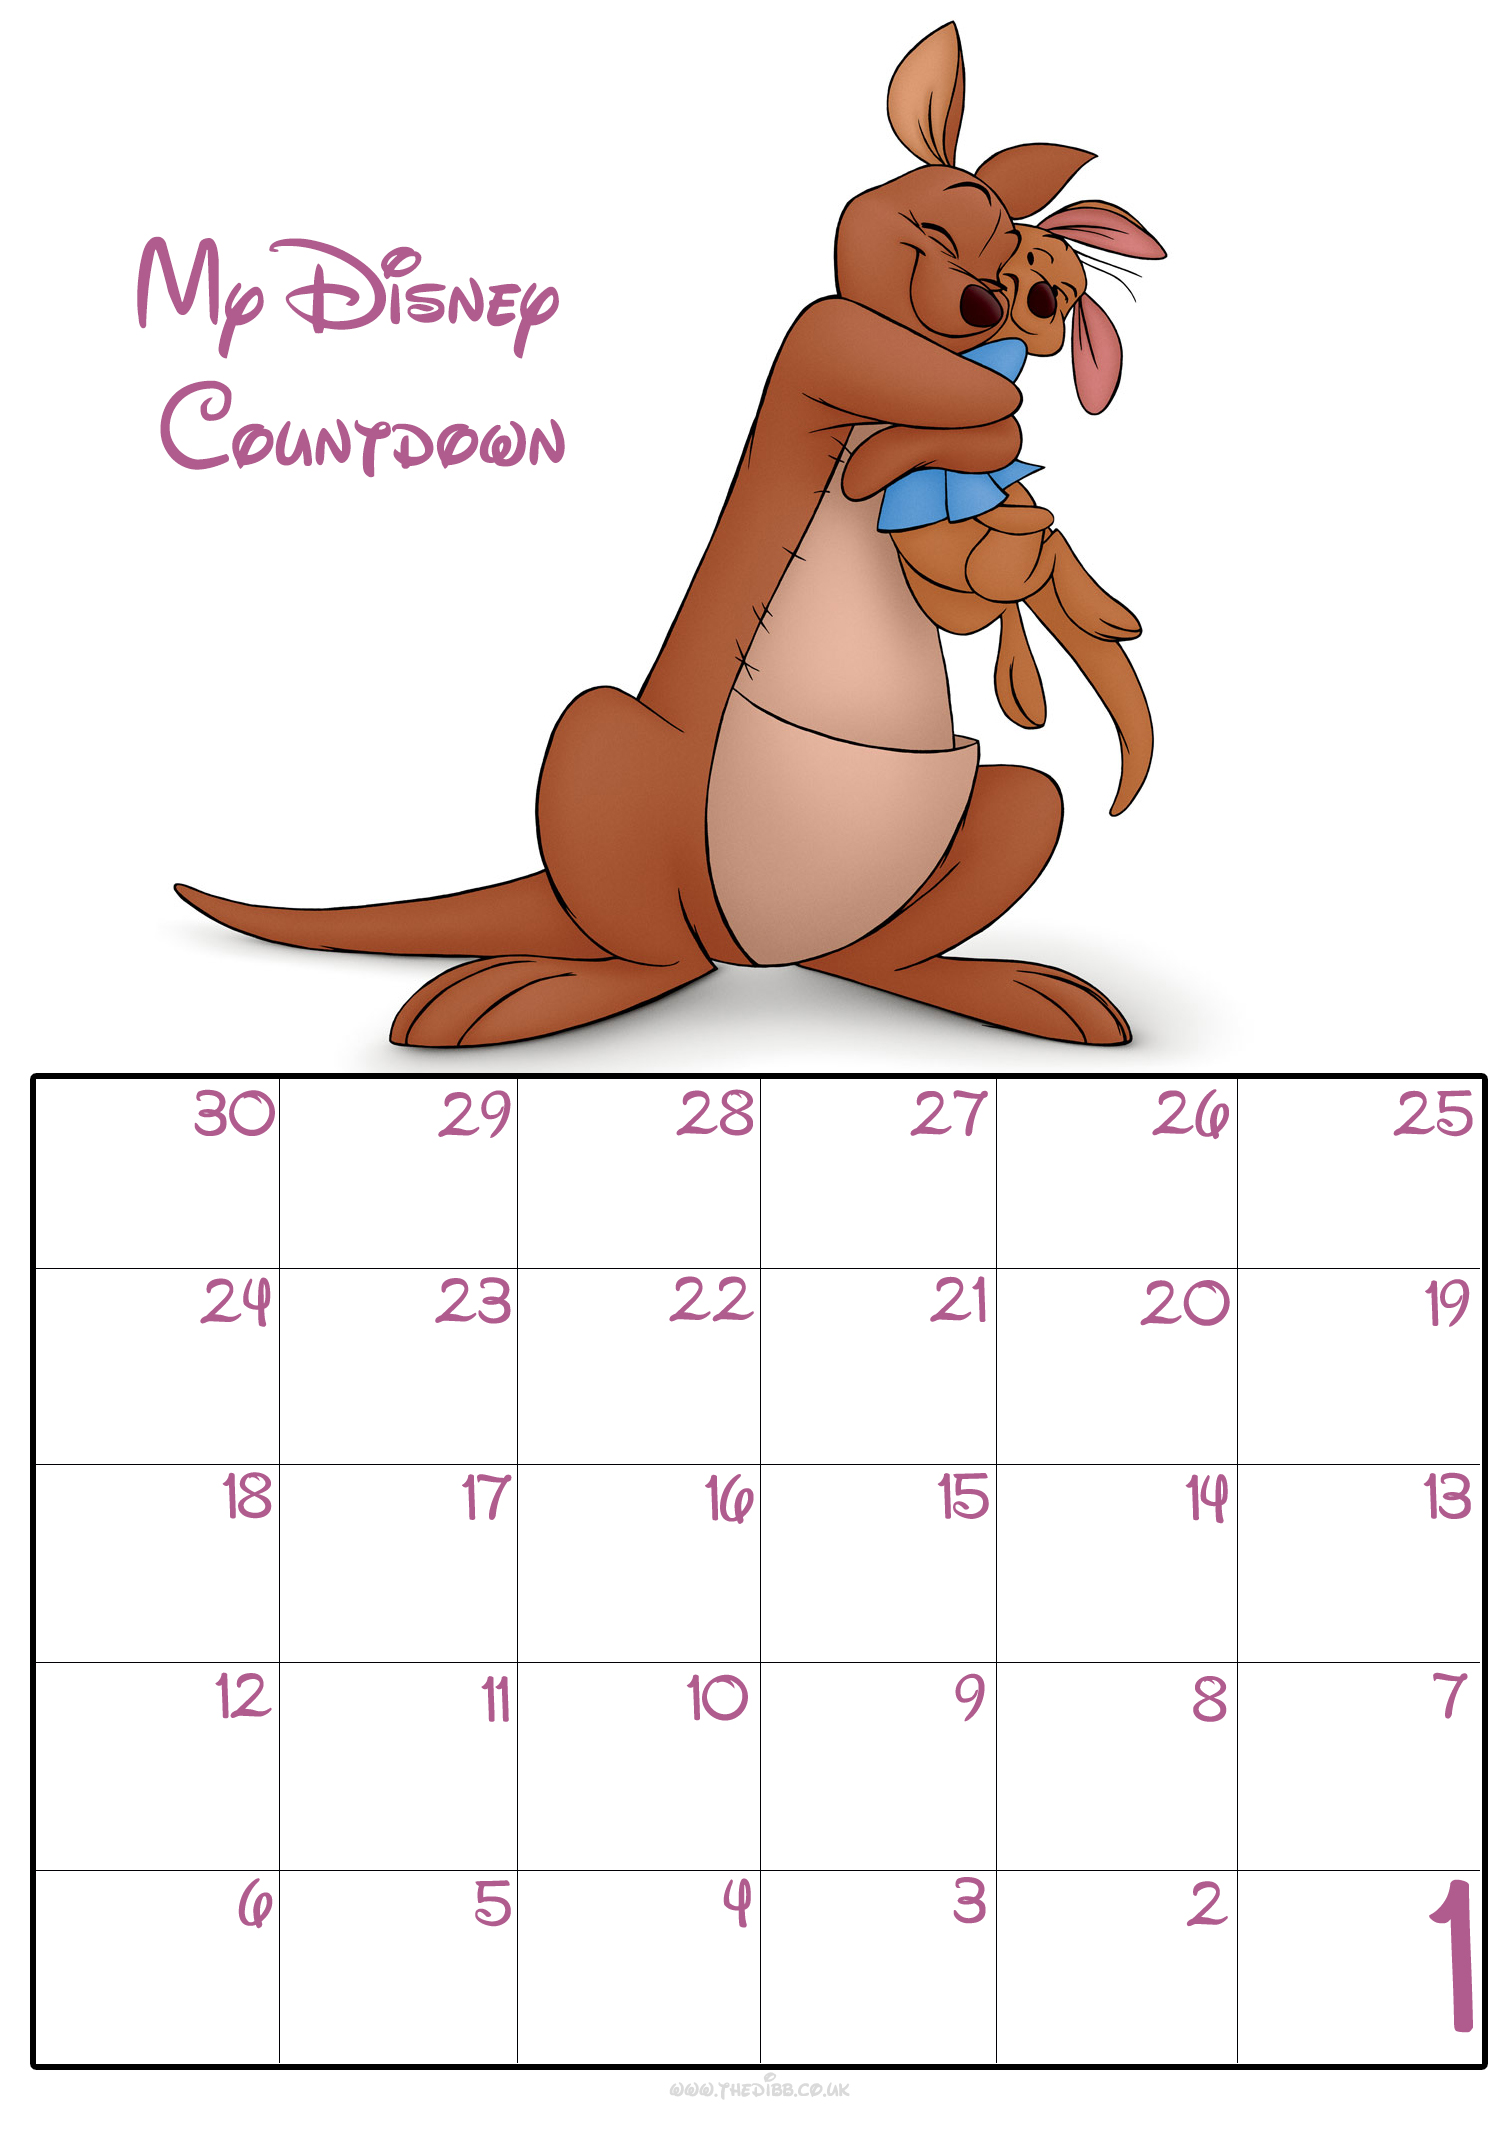 🔥 Download Day Disney Countdown Calendar S by elijahrobertson Disney